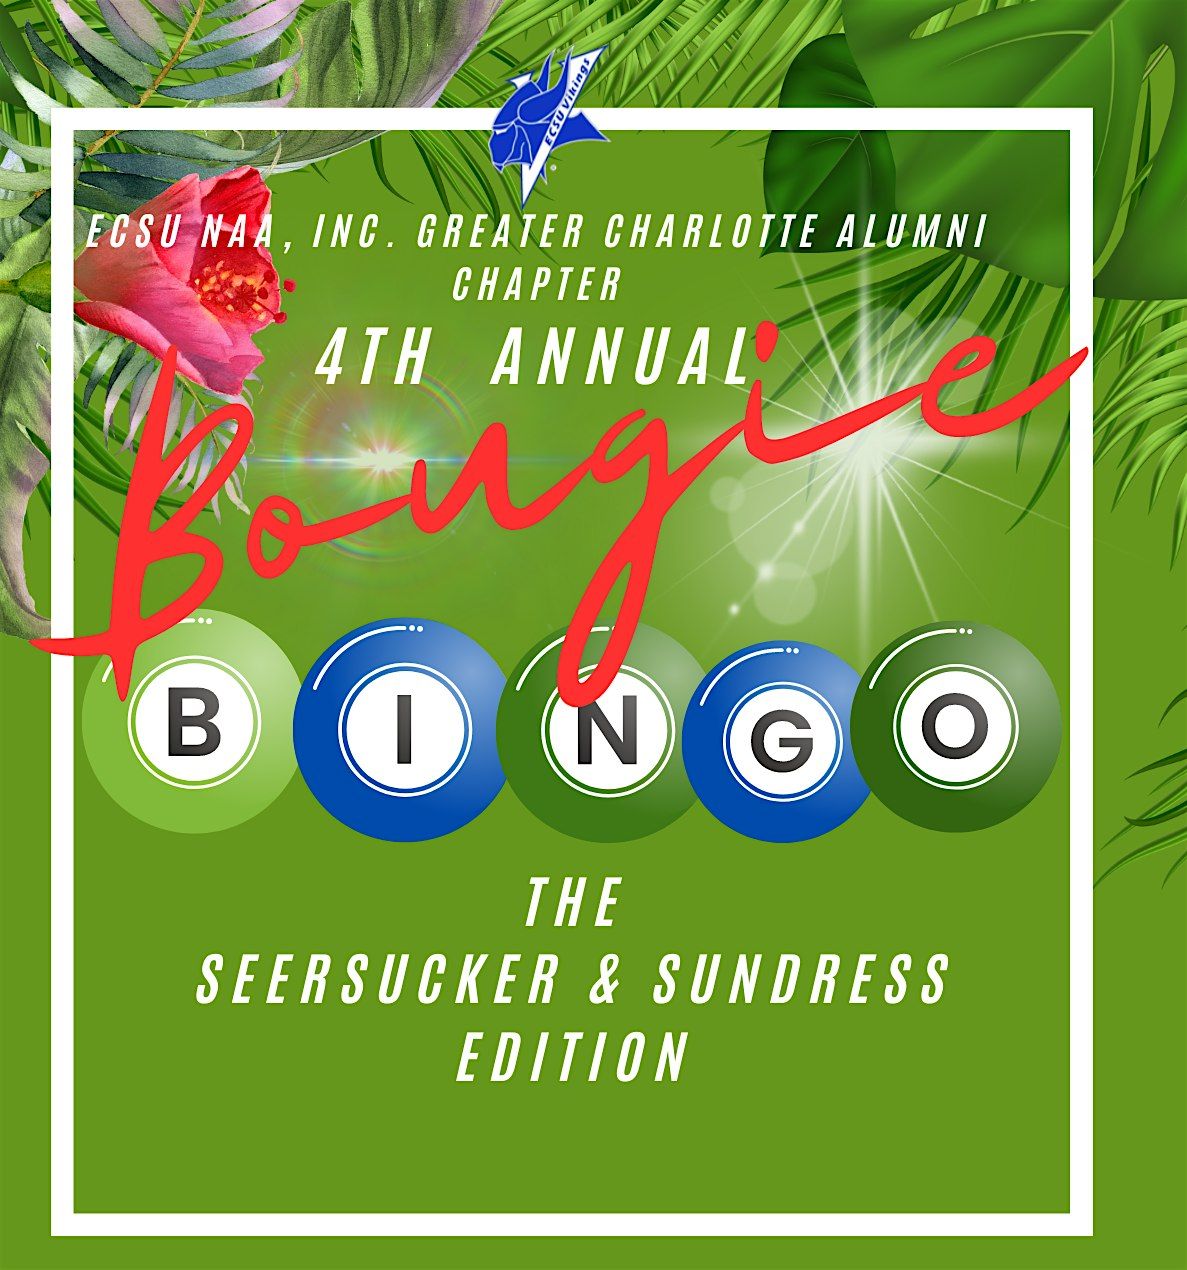 4th Annual Bougie Bingo | The Seersucker & Sundress Edition